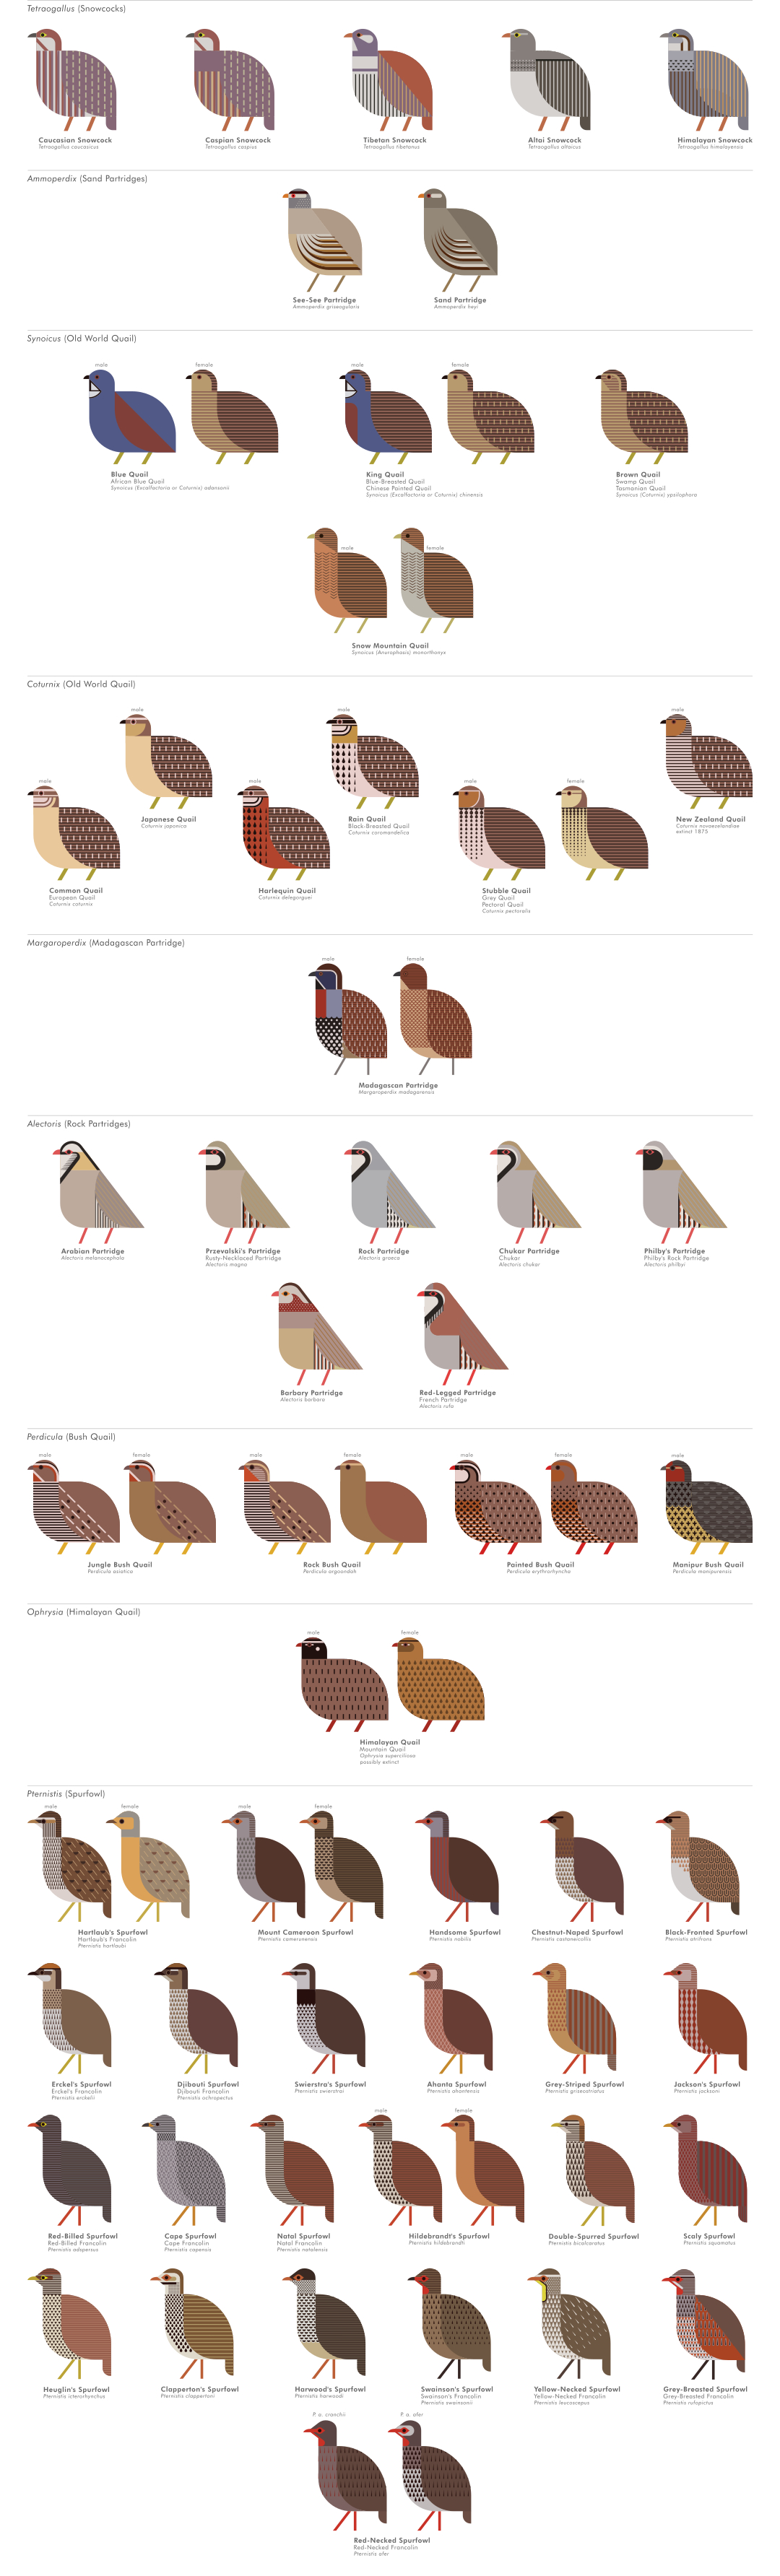 scott partridge - ave - avian vector encyclopedia - phasianidae - chickens - bird vector art